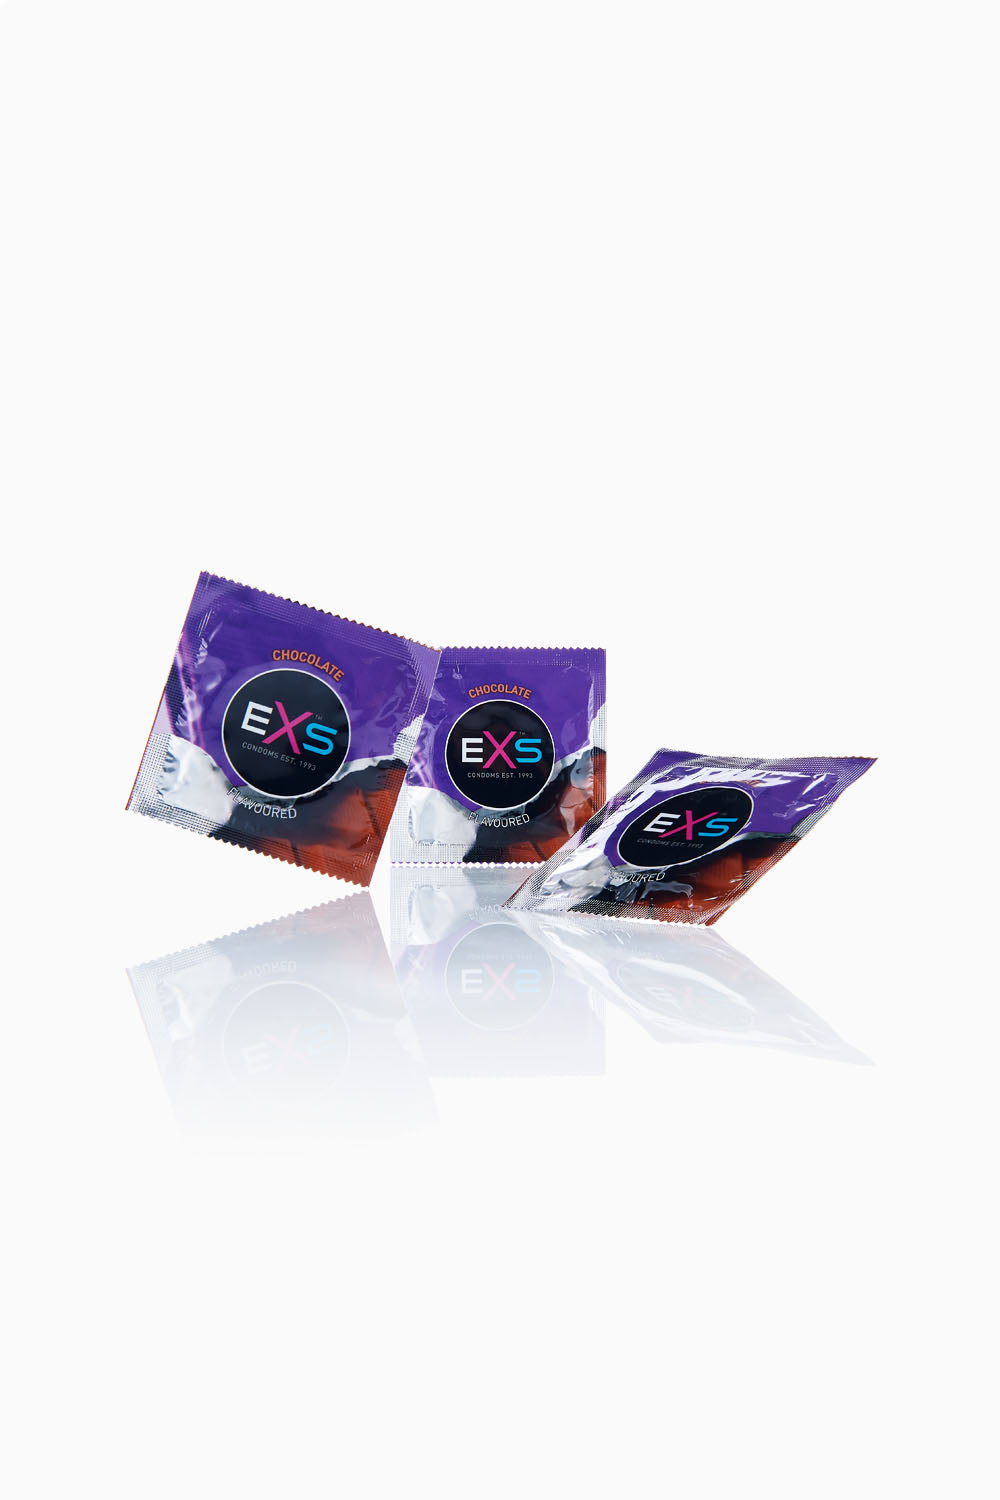 EXS Chocolate Condoms 50 Pack